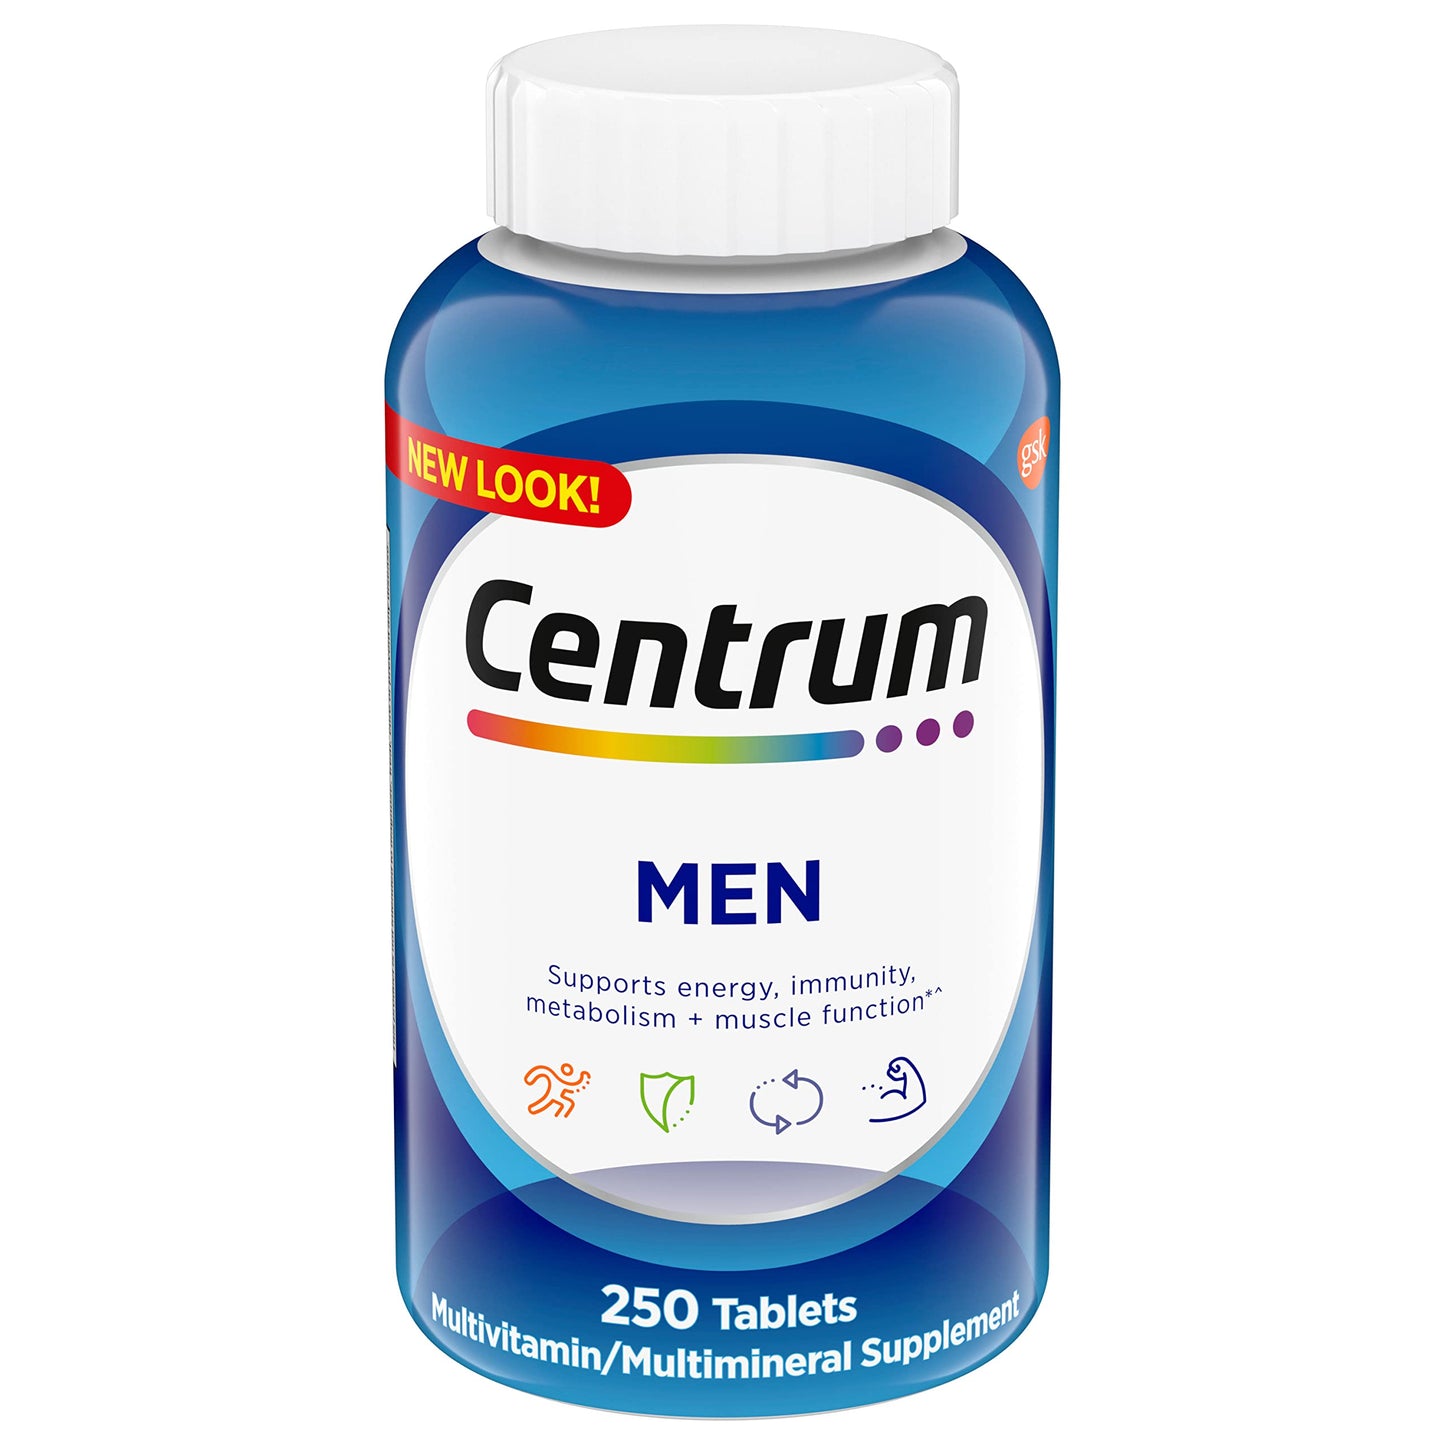 Centrum Multivitamin for Men, Multivitamin/Multimineral Supplement with Vitamin D3, B Vitamins and Antioxidants, Gluten Free, Non-GMO Ingredients - 250 Count Exp 05/24